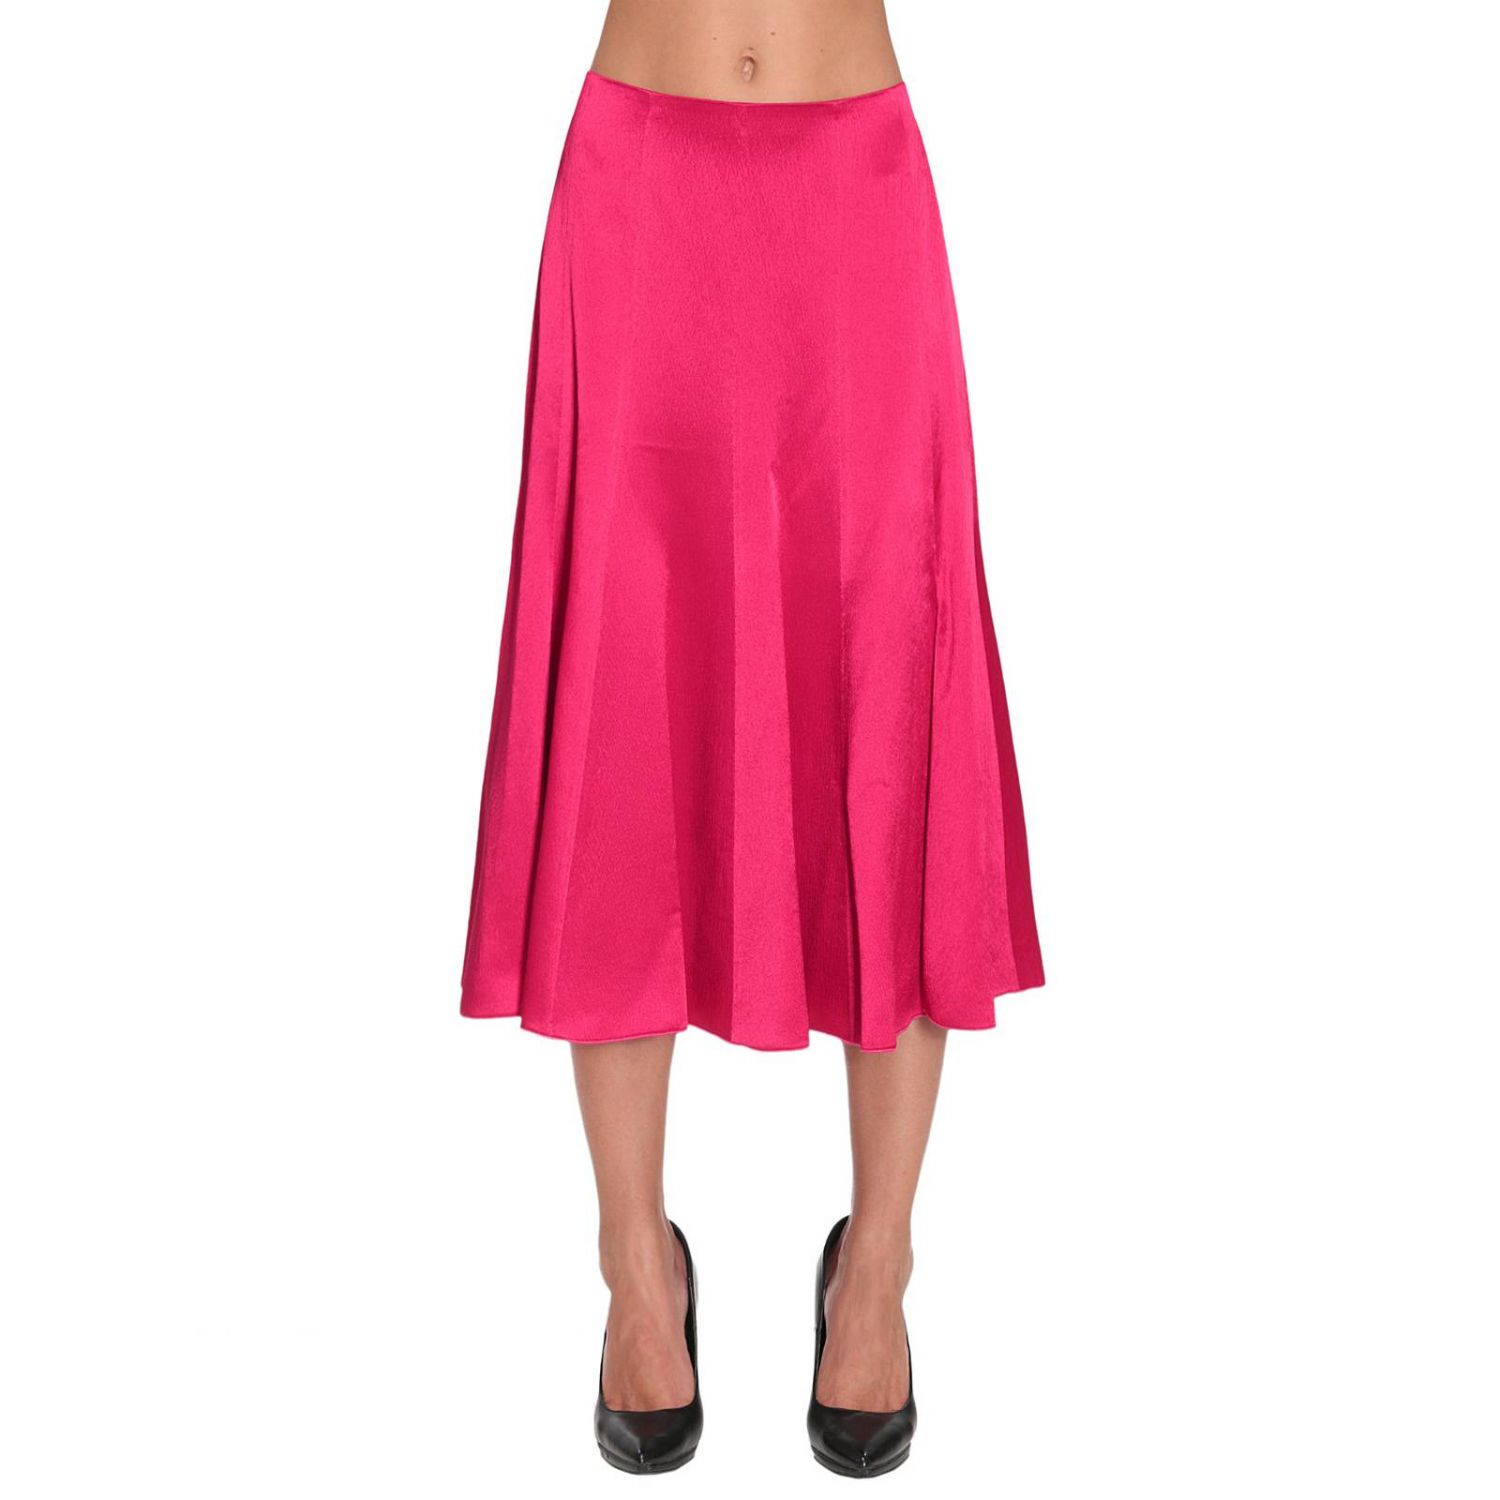 Skirt Blumarine Women | Skirt Women Blumarine 12334 Giglio EN